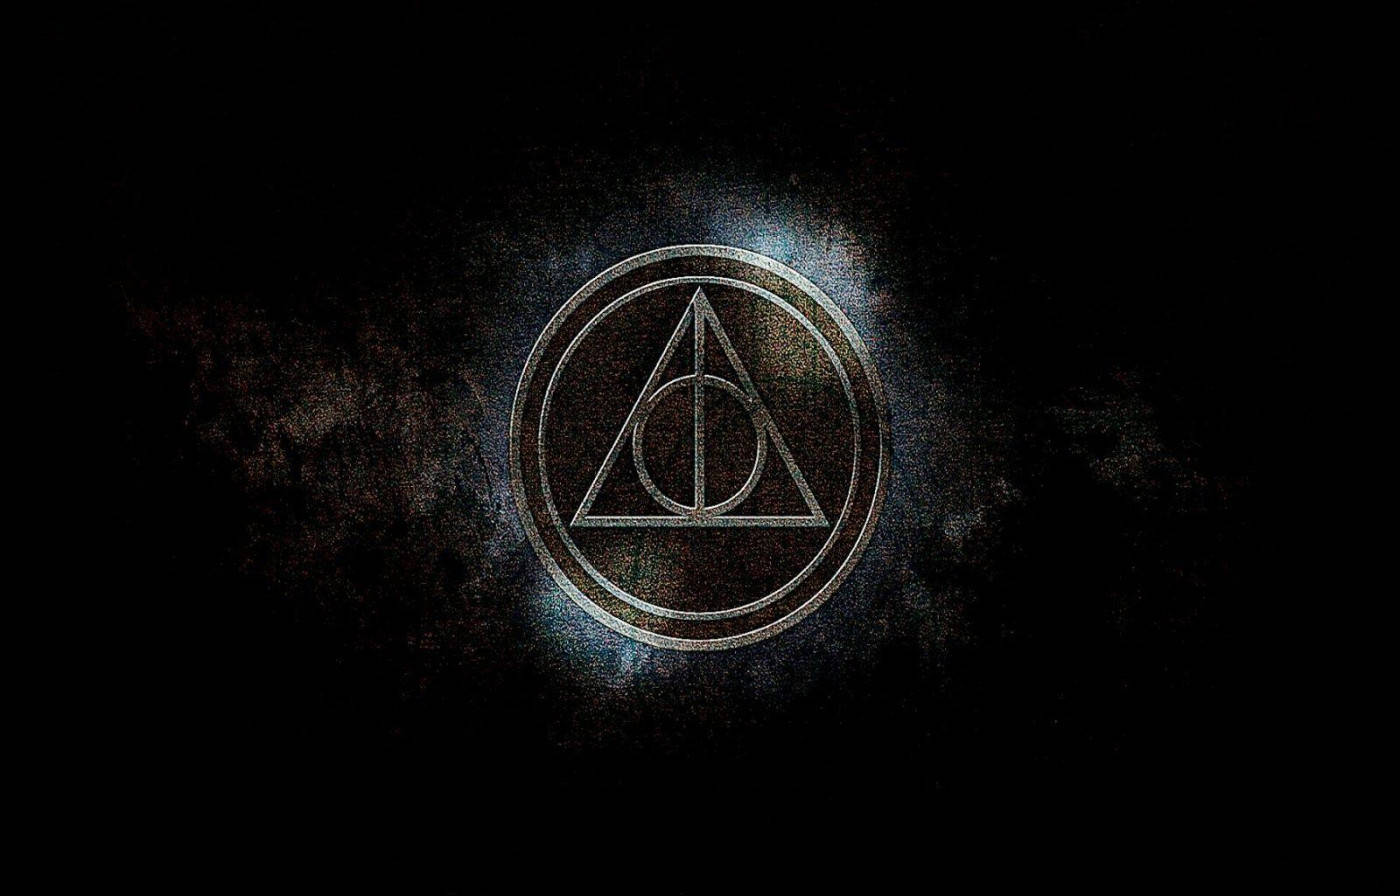 Deathly Hallows Symbol Harry Potter iPad Wallpaper